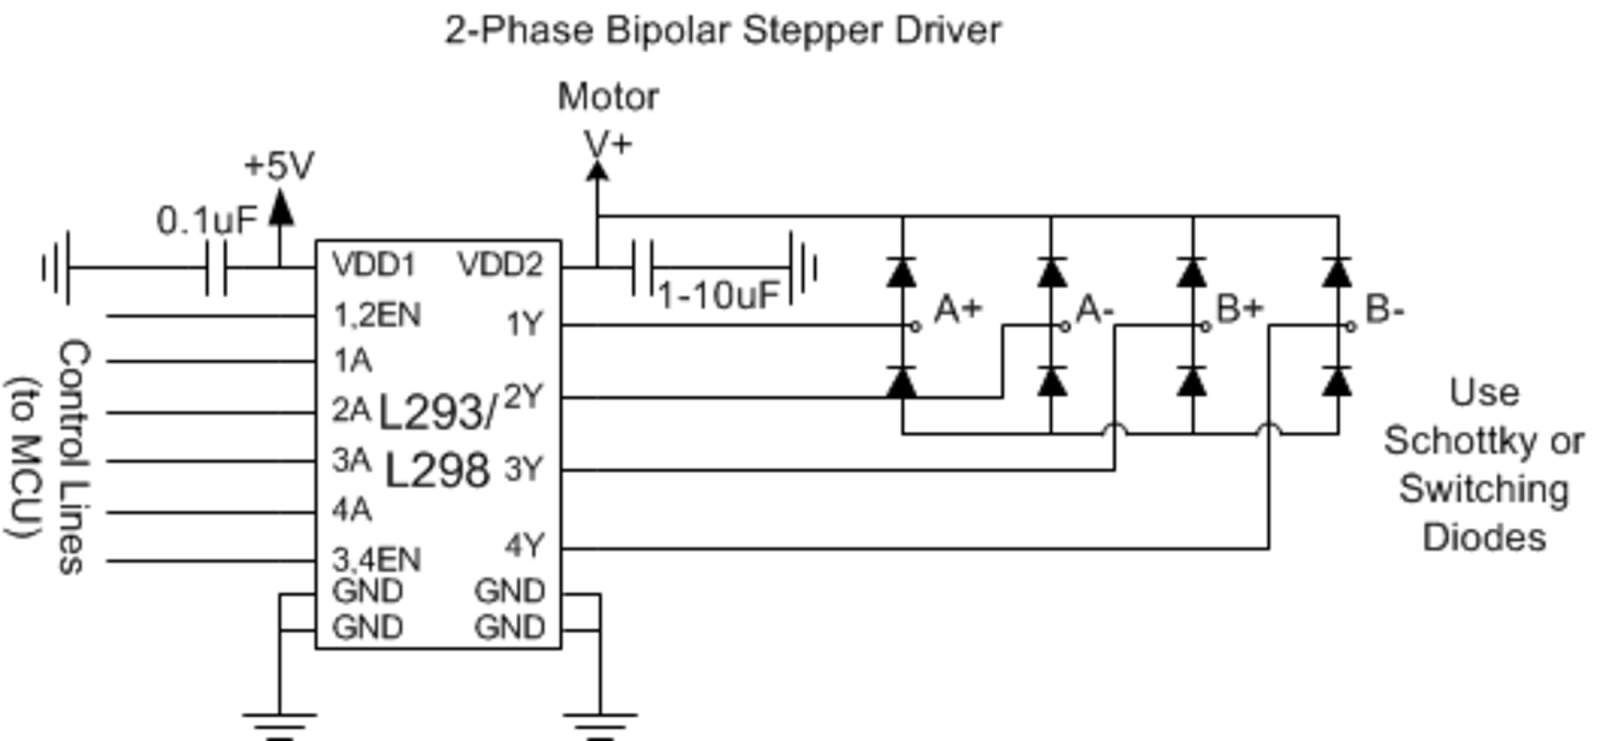 A schematic pin diagram showing a bipolar L293D stepper motor driver